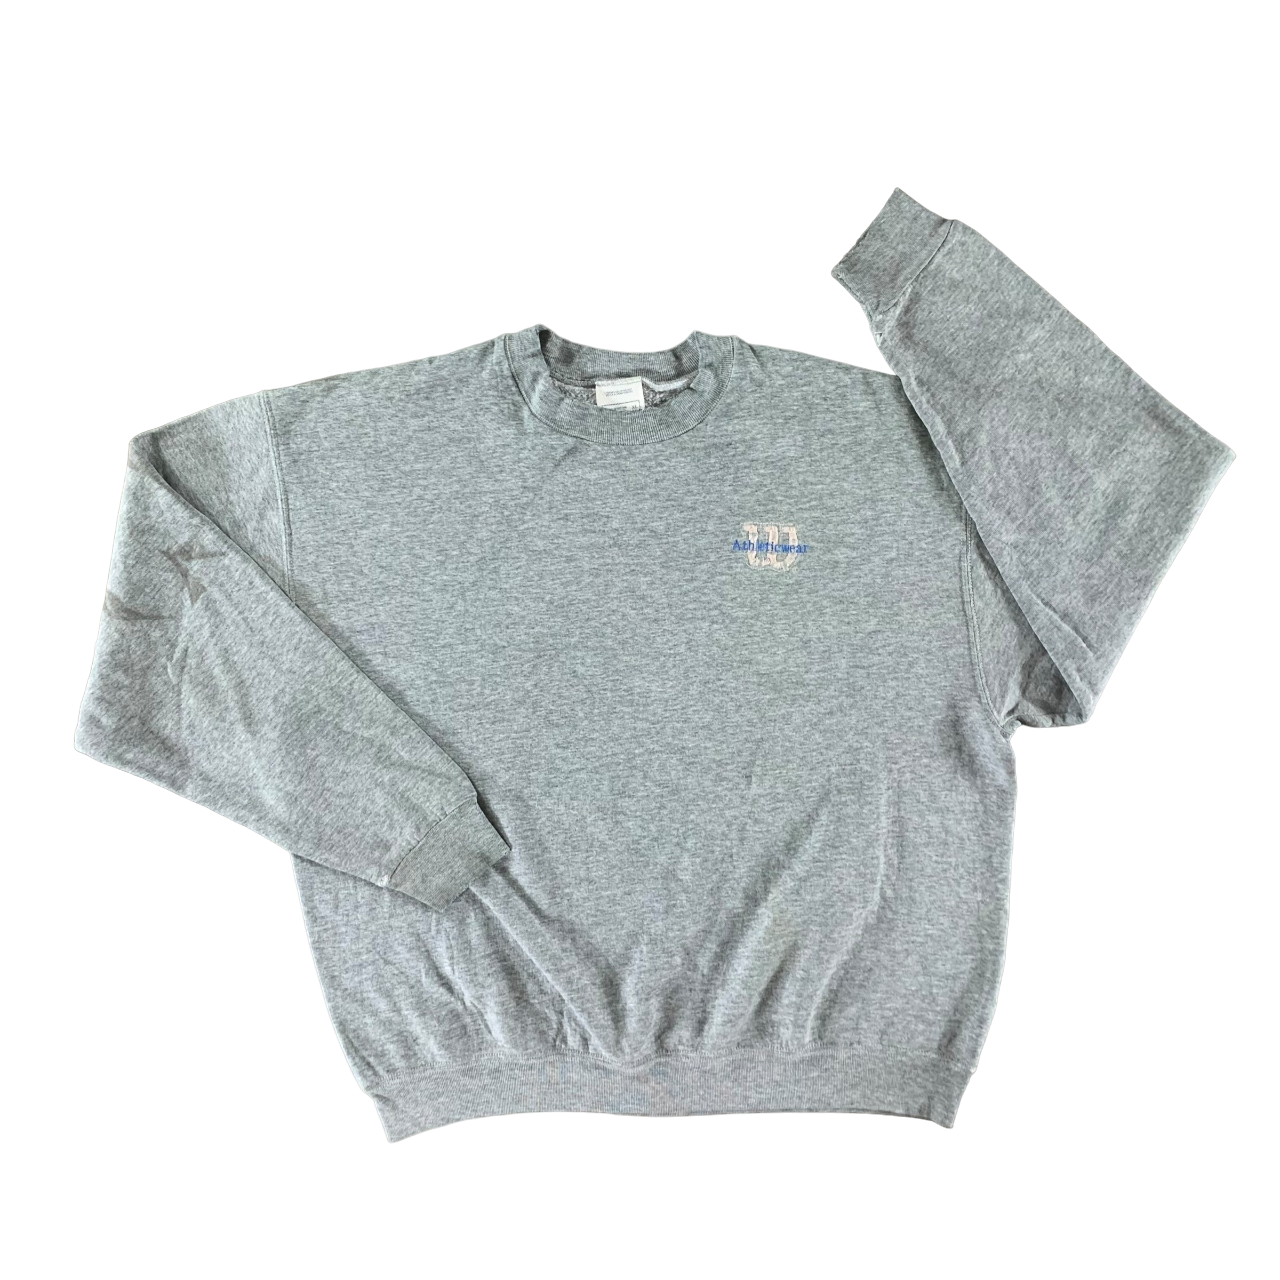 Vintage 1990s Wilson Athleticwear Sweatshirt size XL